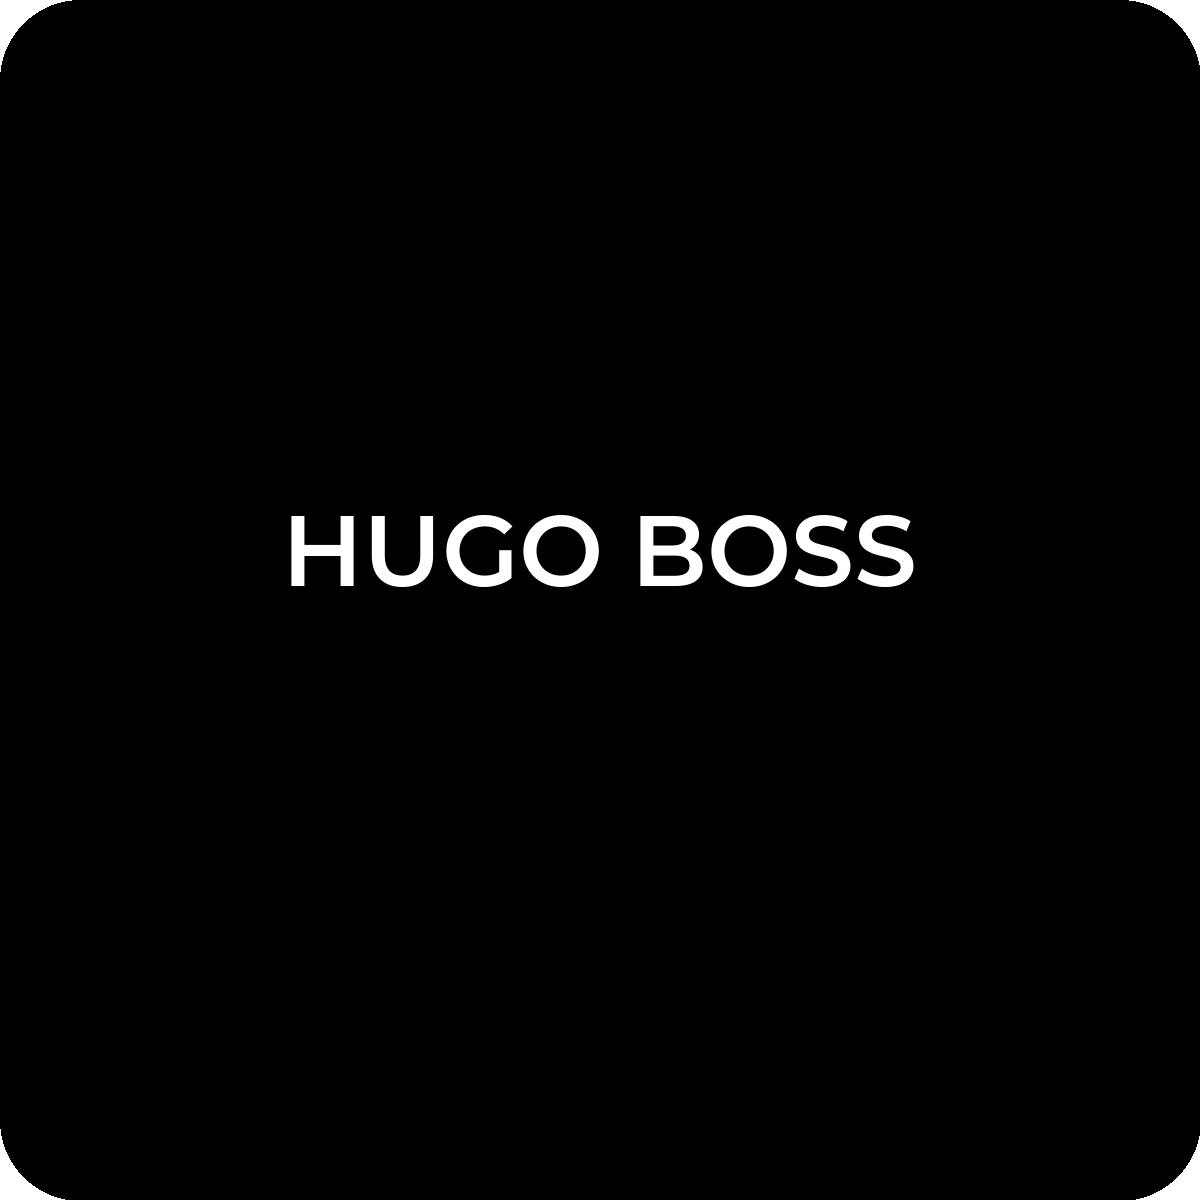 HUGO BOSS Legit Check and Authentication Service – LegitGrails